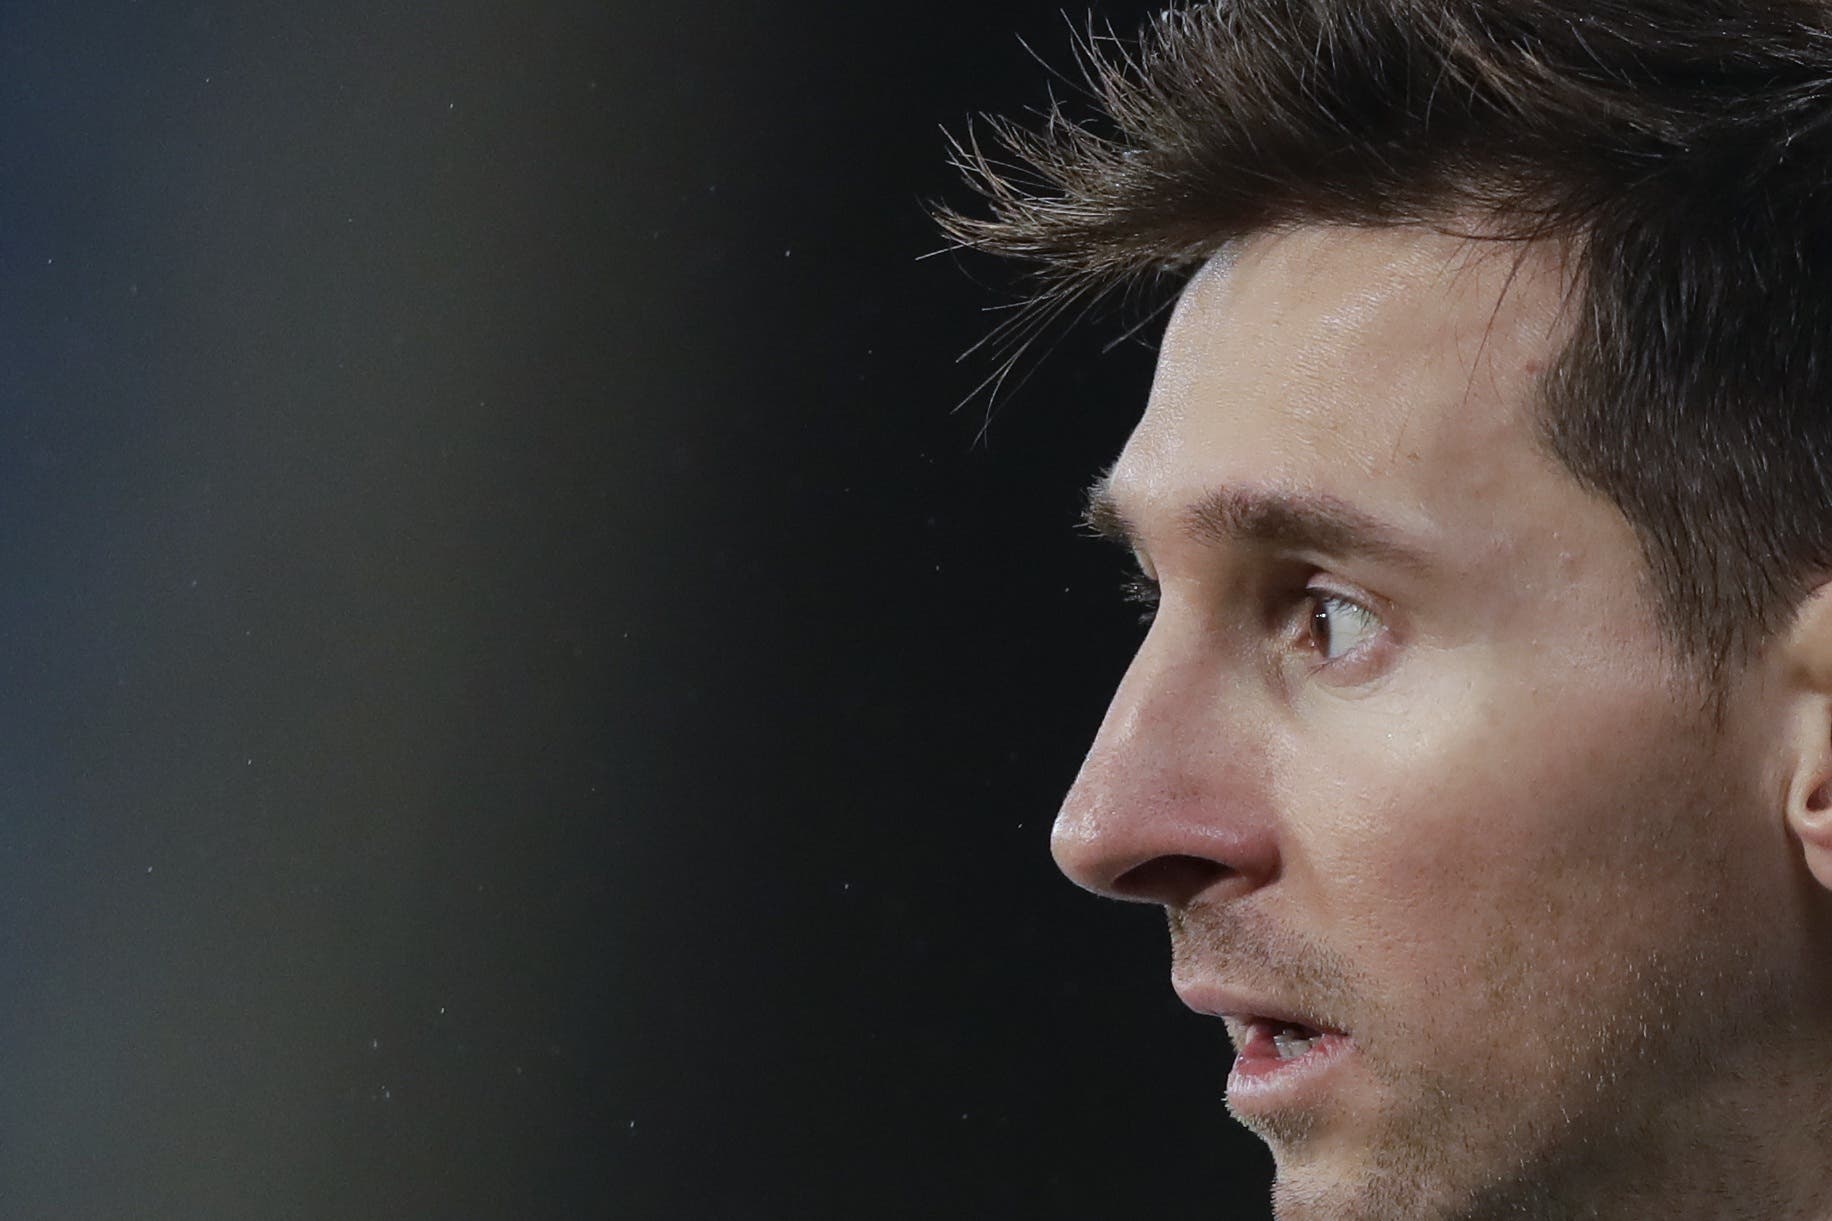 Incierto futuro de Lionel Messi al expirar contrato con Barcelona